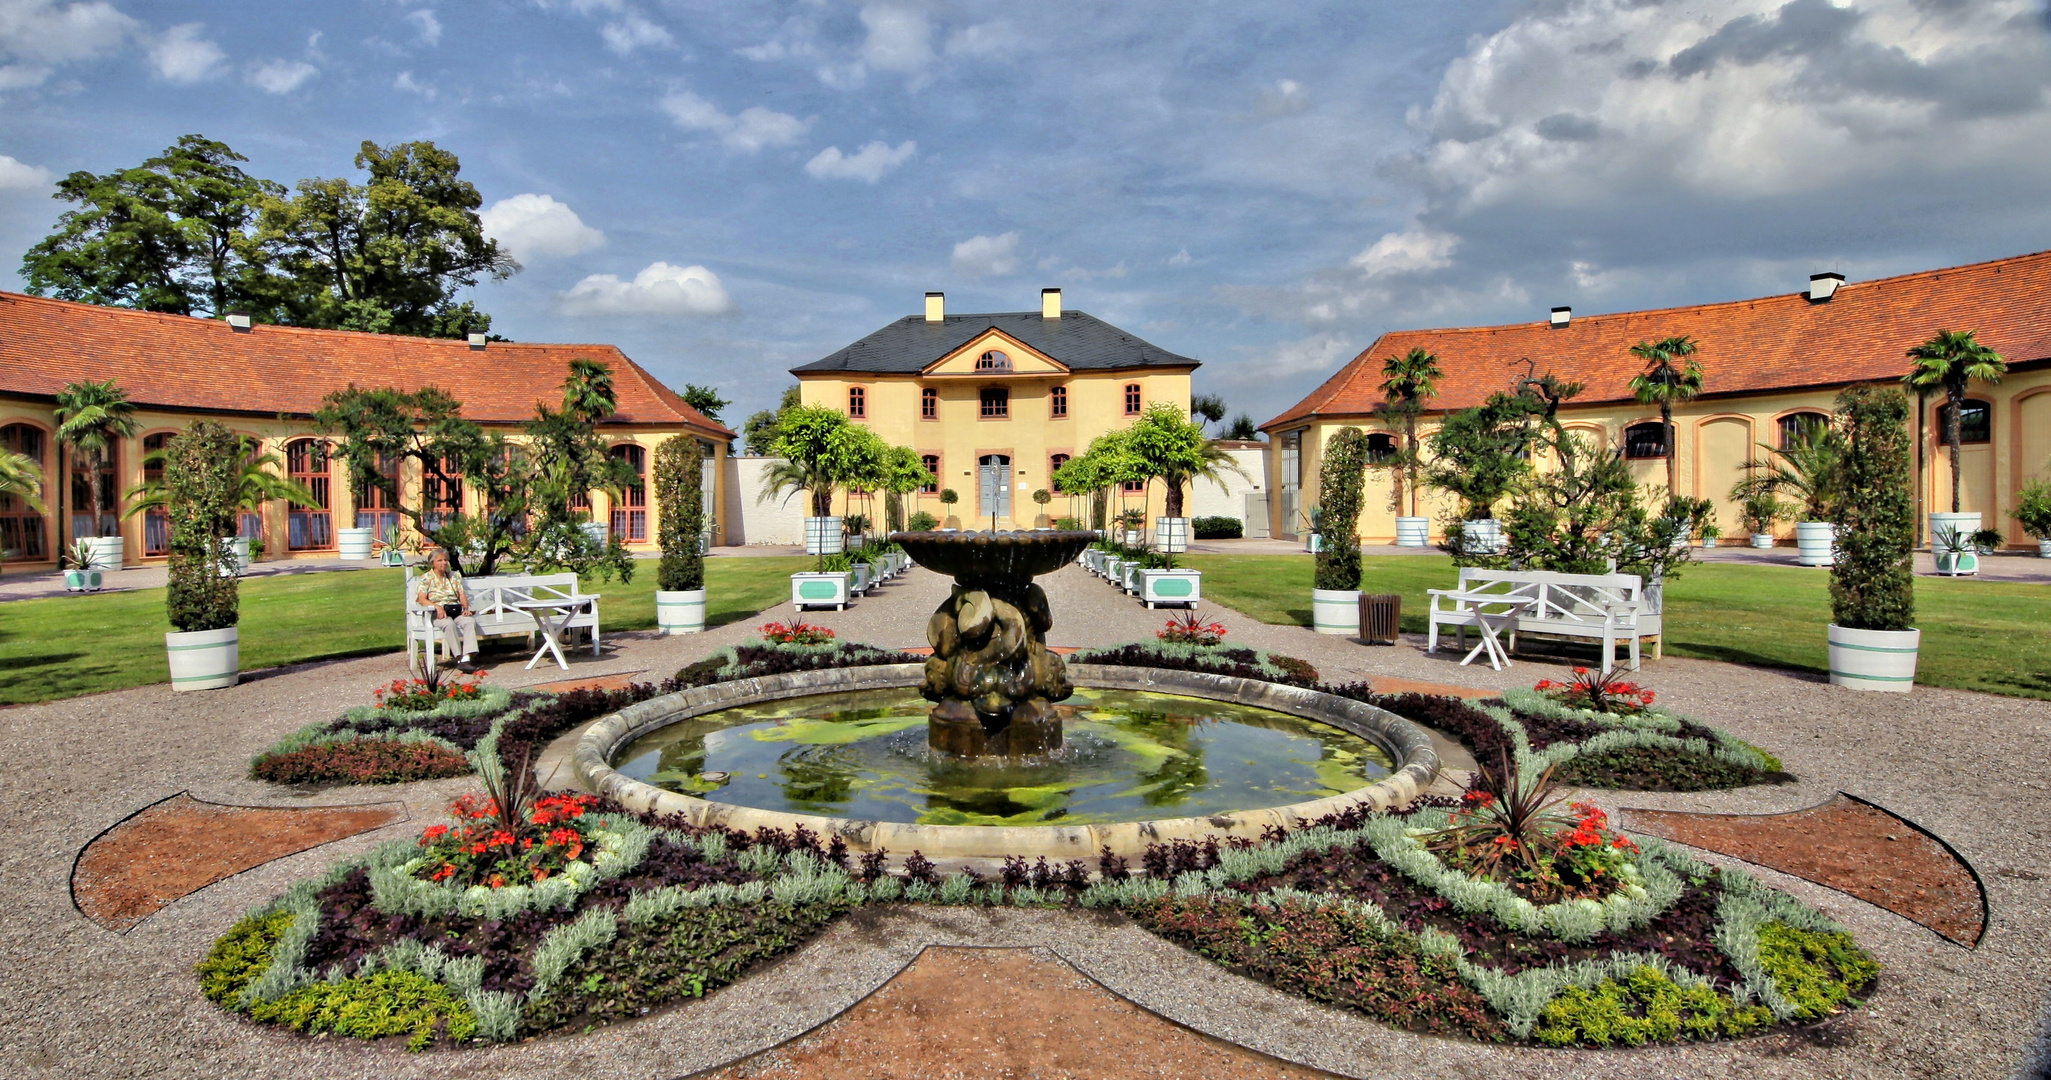 Schloss Belvedere Weimar - Orangerie